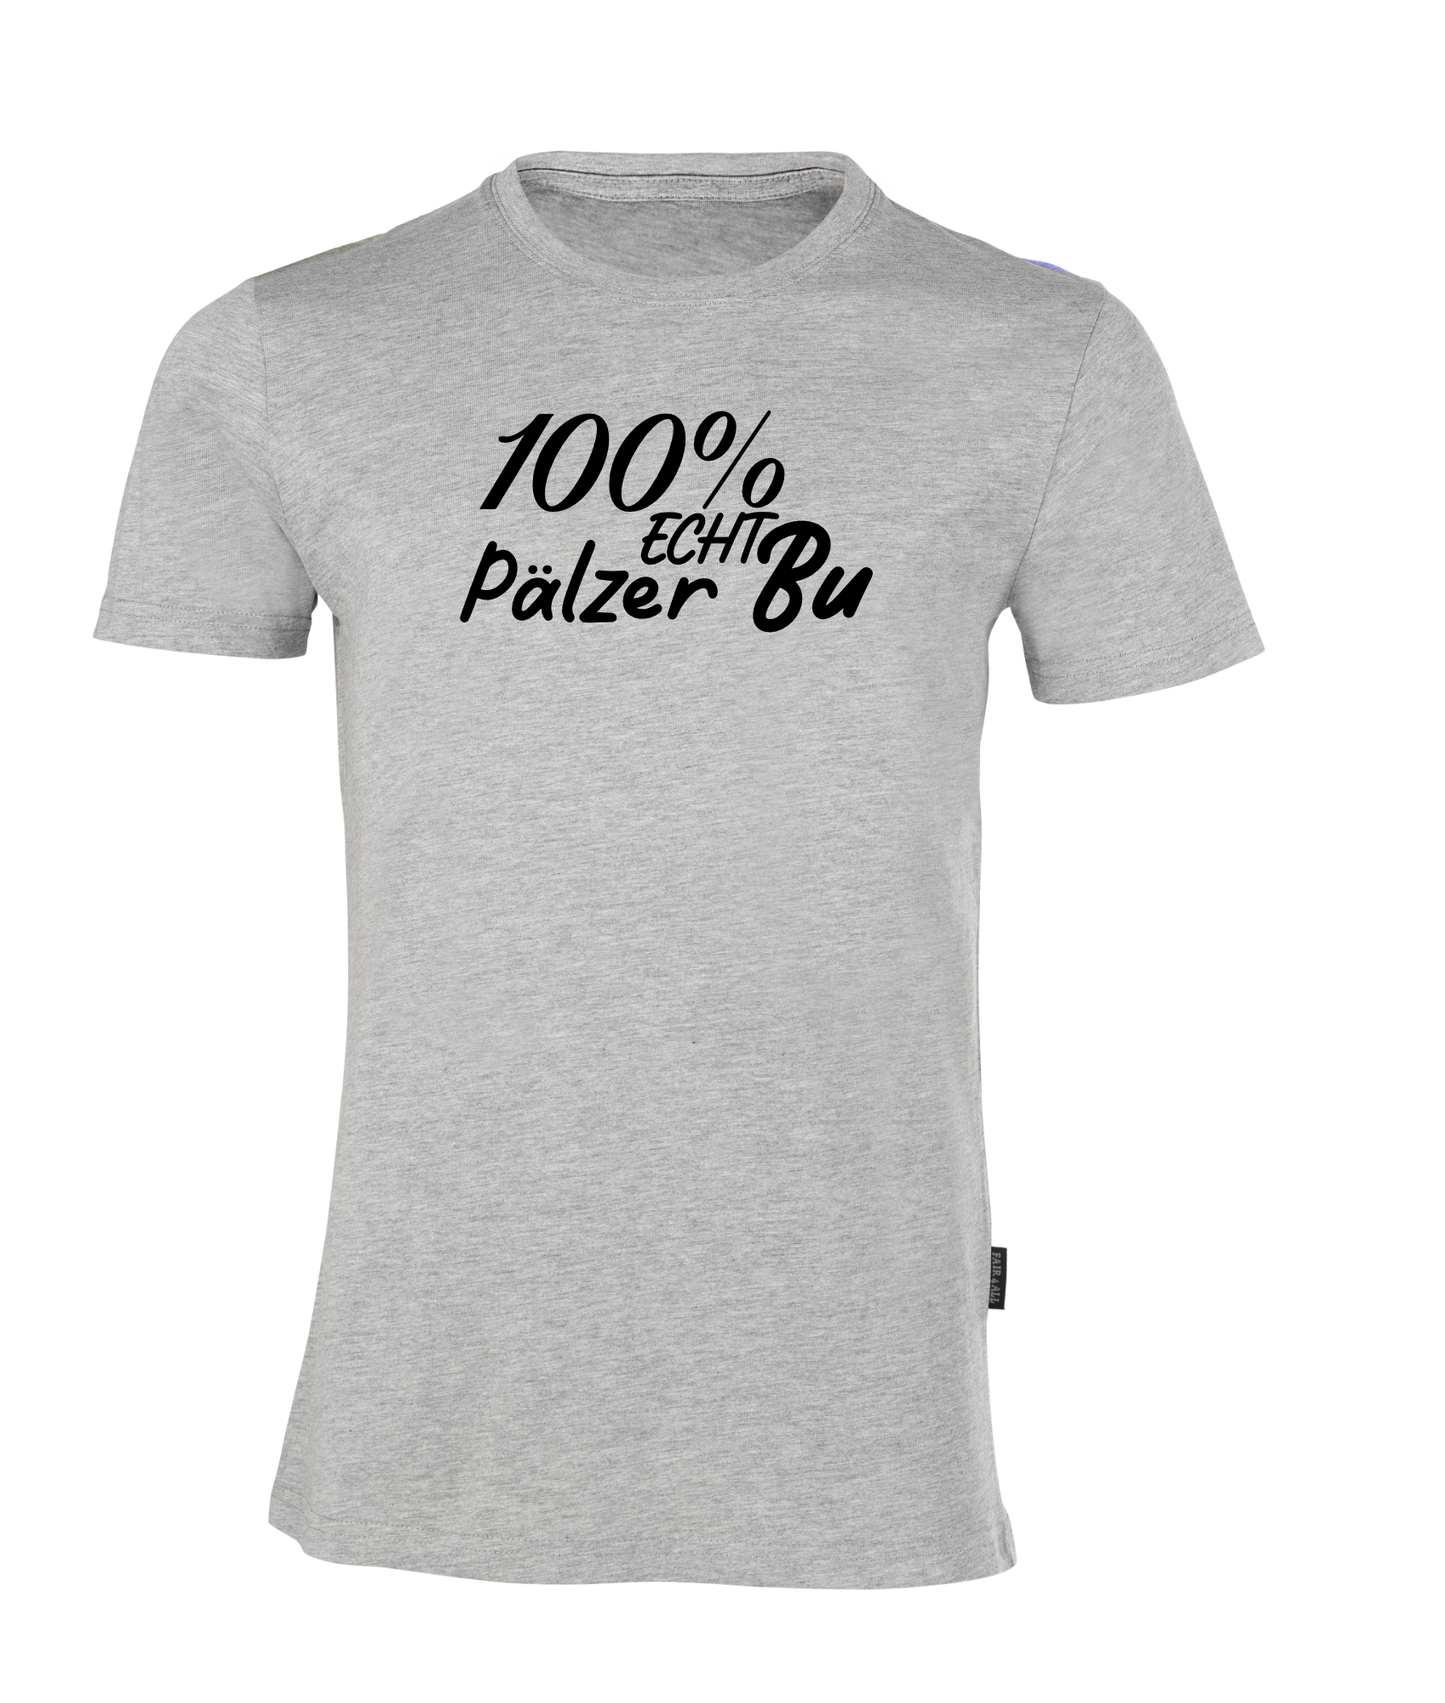 100% Pälzer Bu - pREHmium T-Shirt Unisex